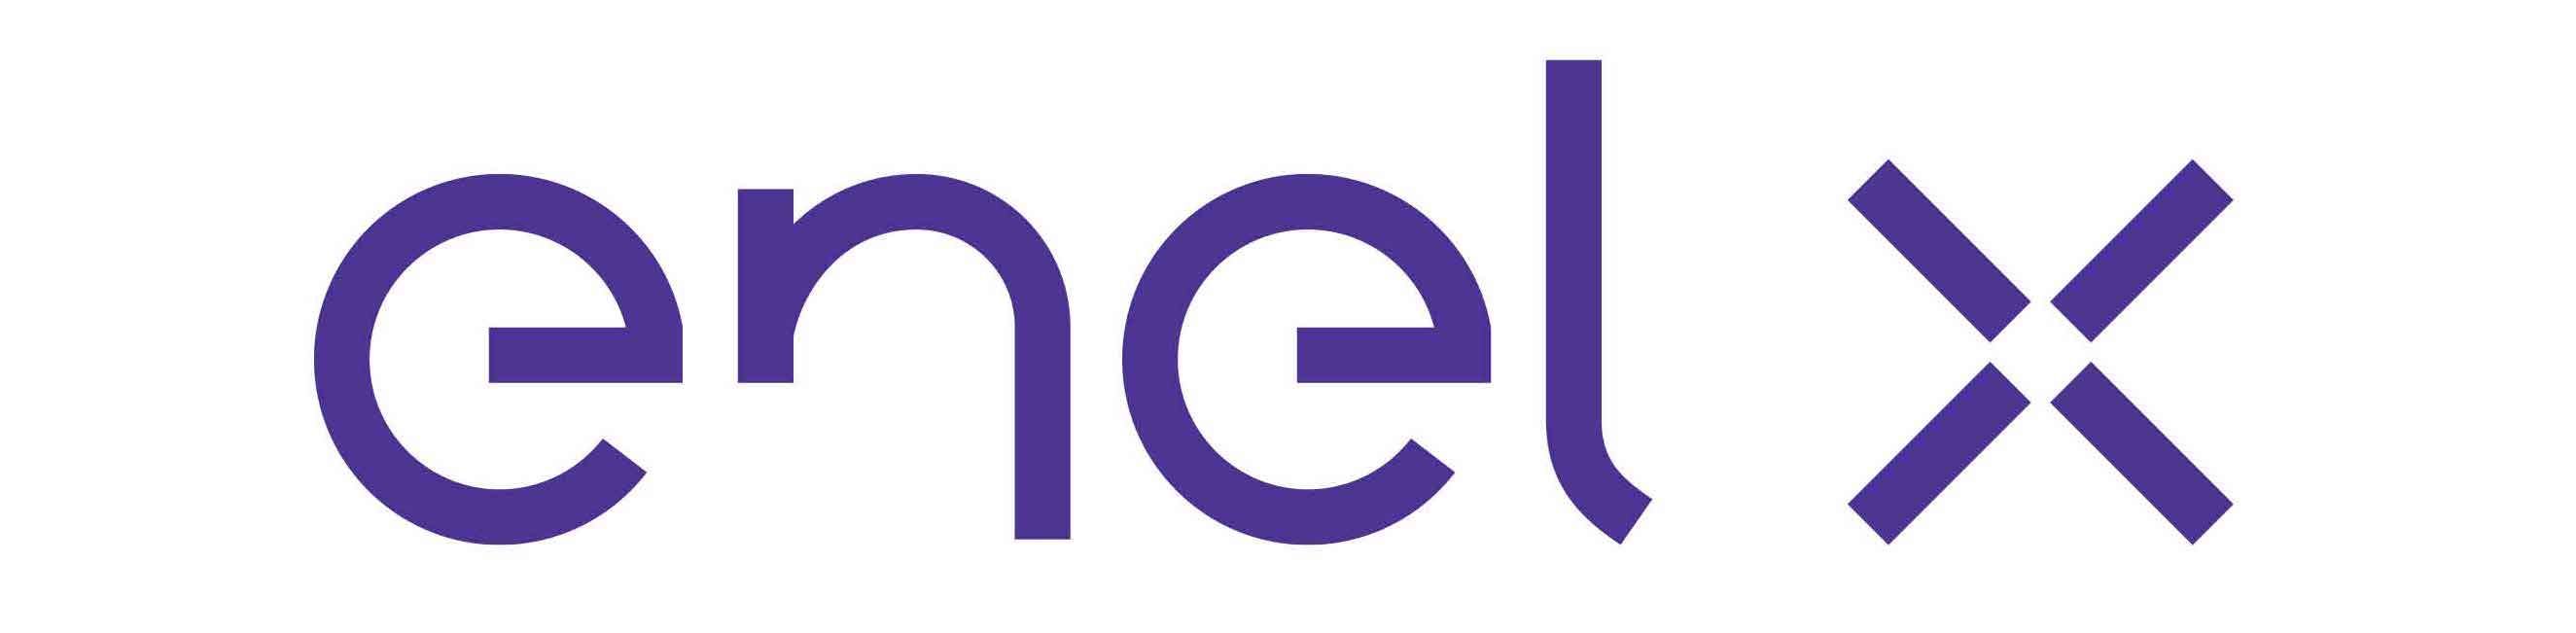 logo Enel x